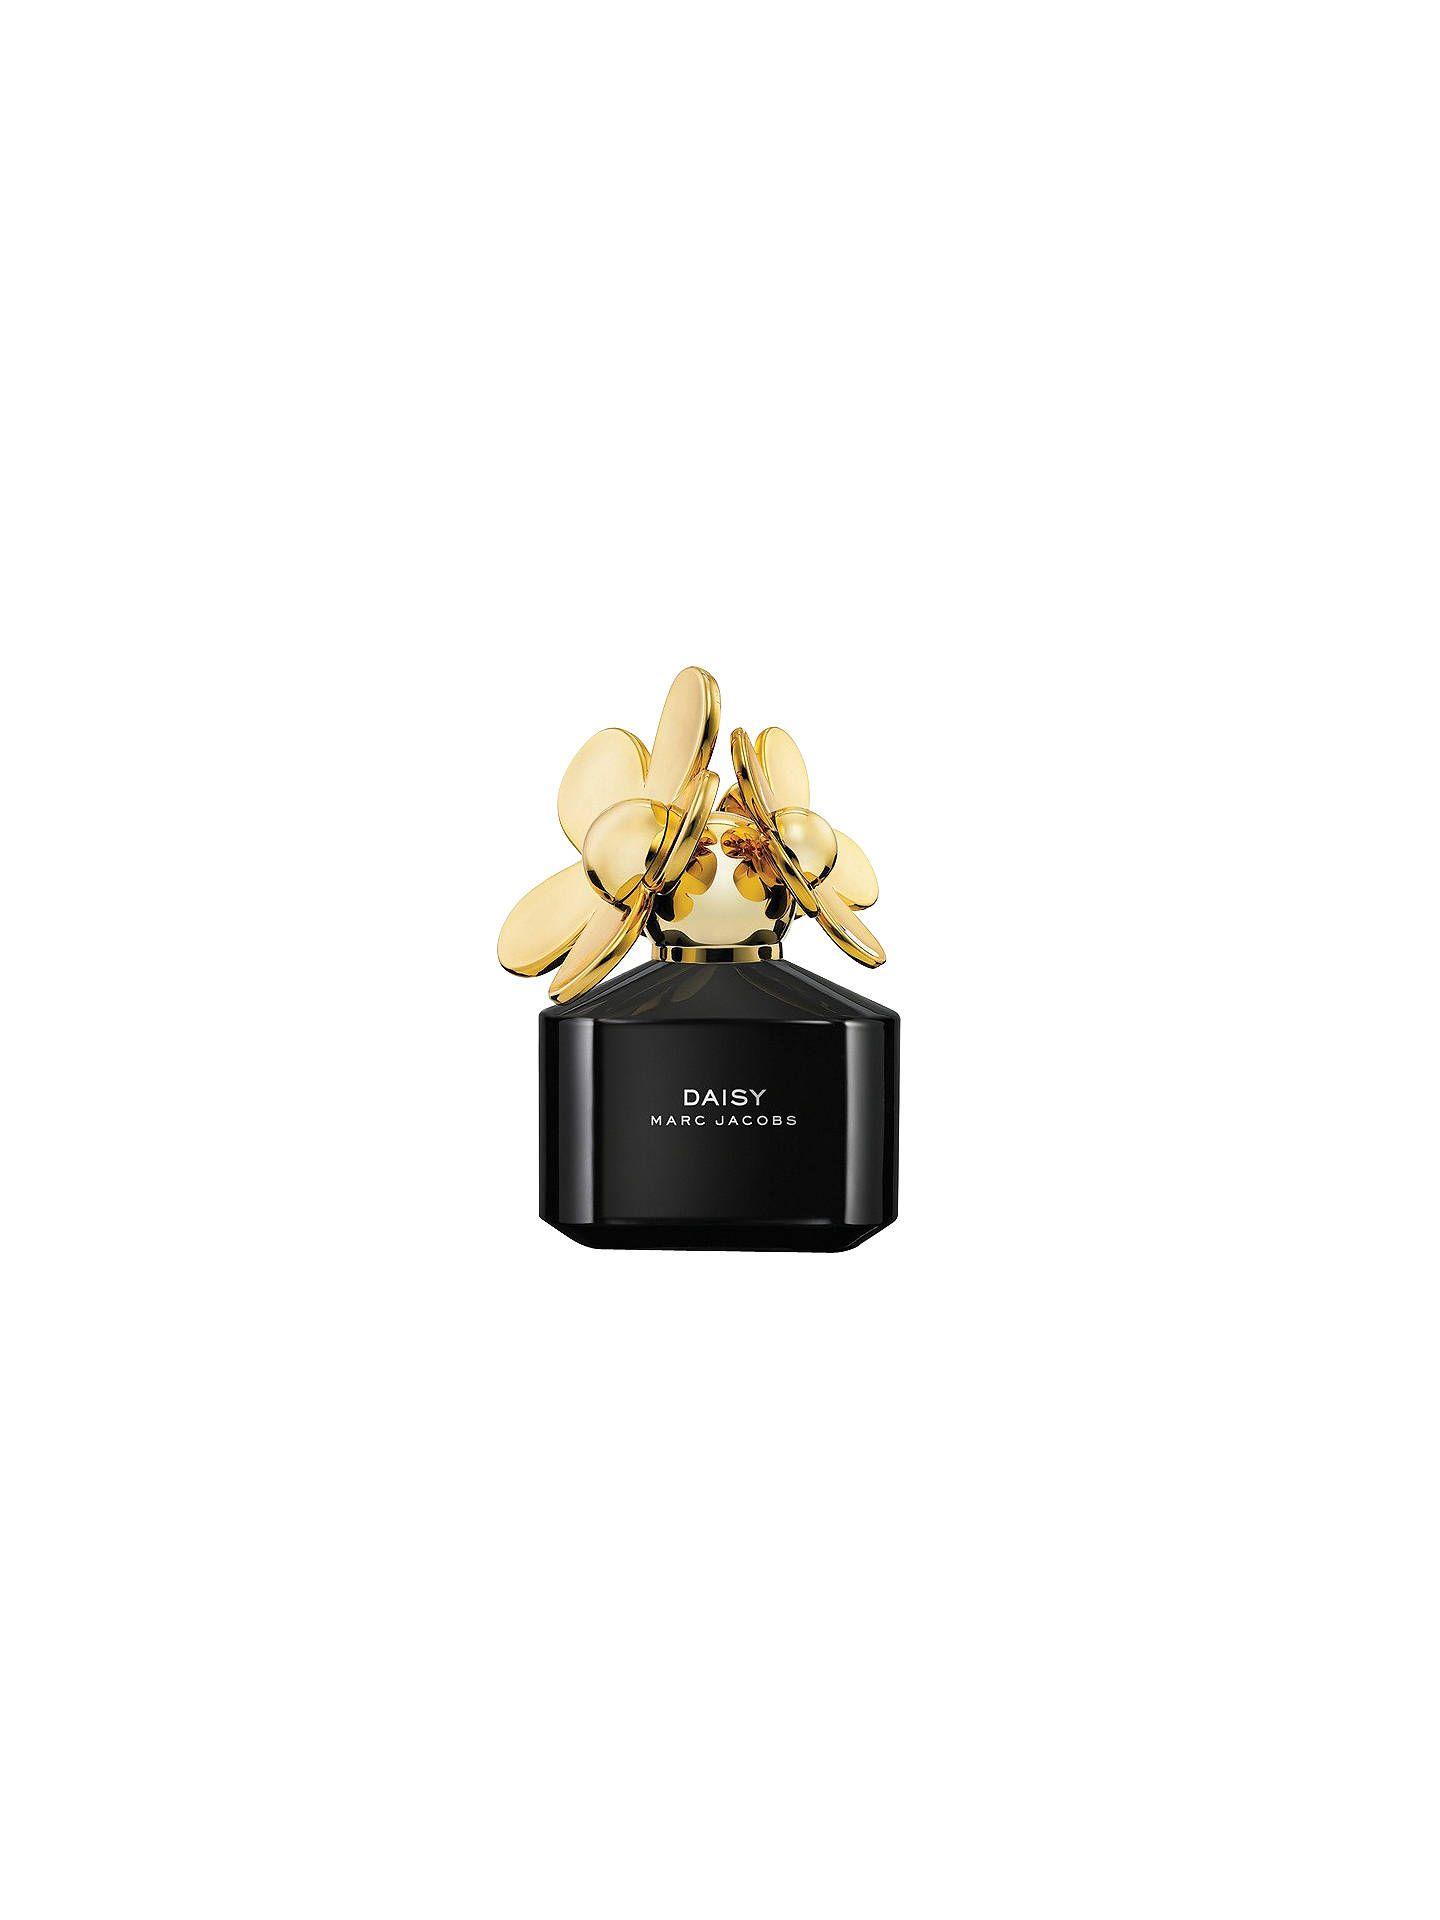 Daisy Marc Jacobs Logo - Marc Jacobs Daisy Black Edition Eau de Parfum, 50ml at John Lewis ...